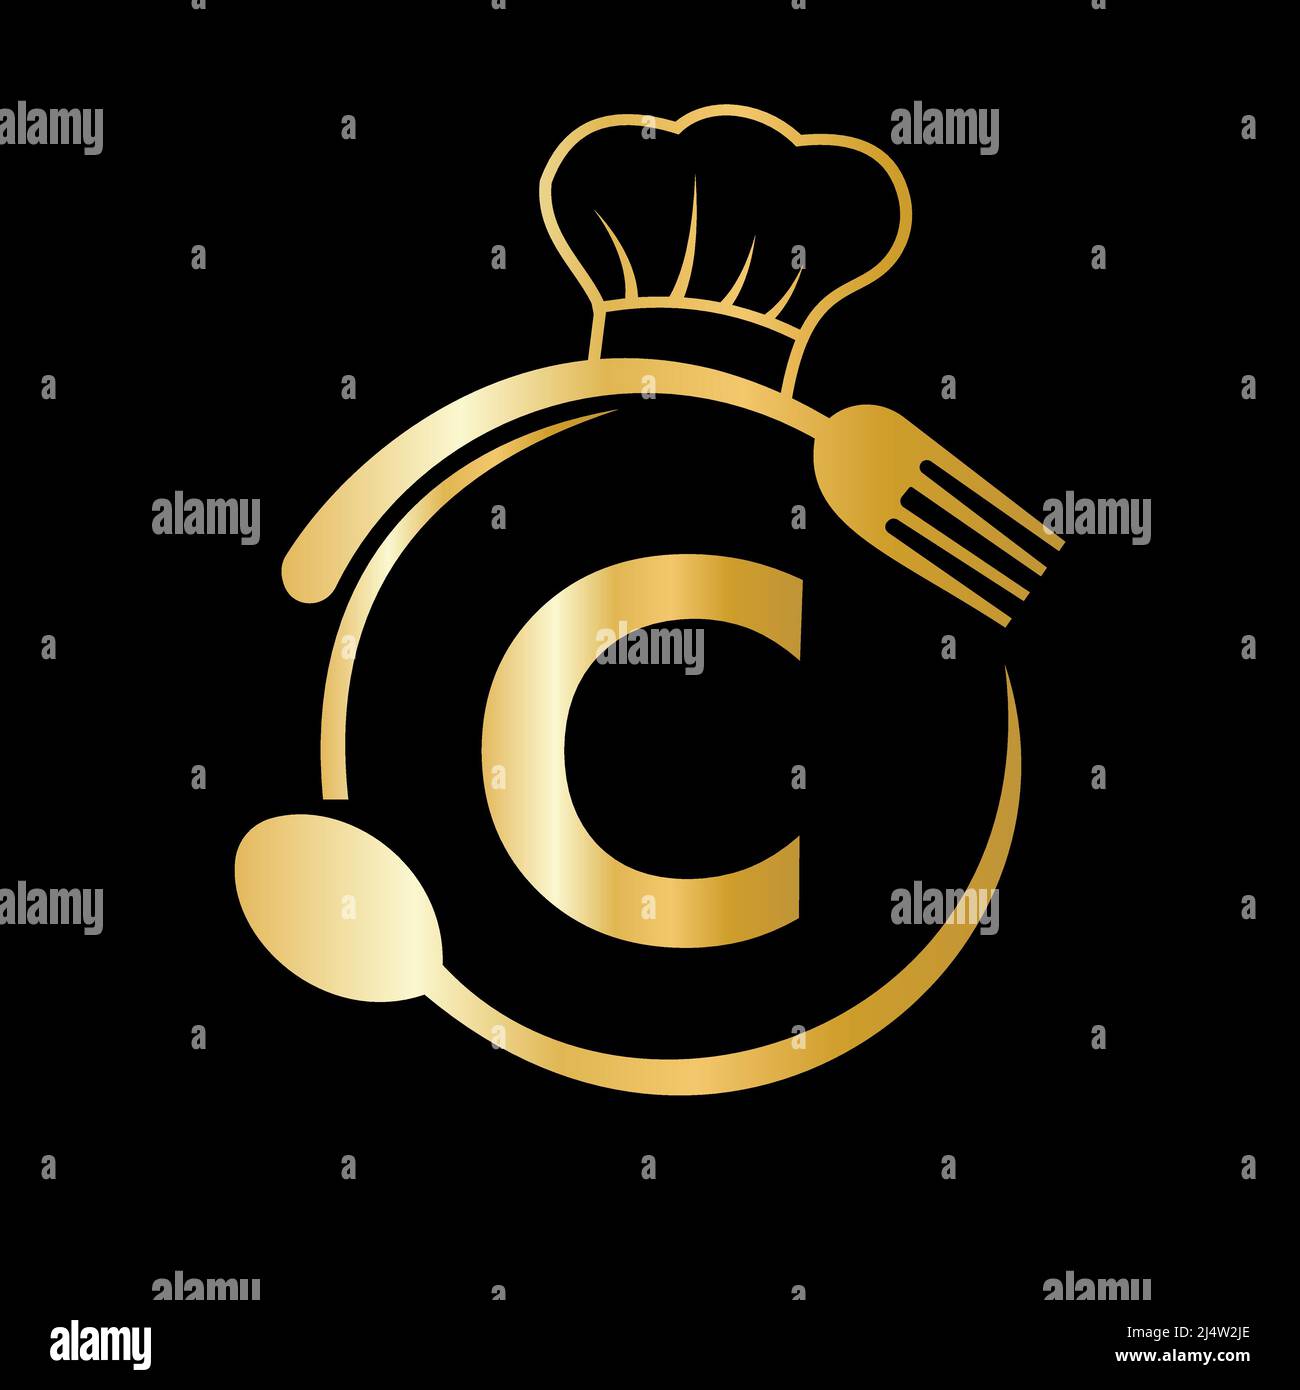 food brand logos that start with c